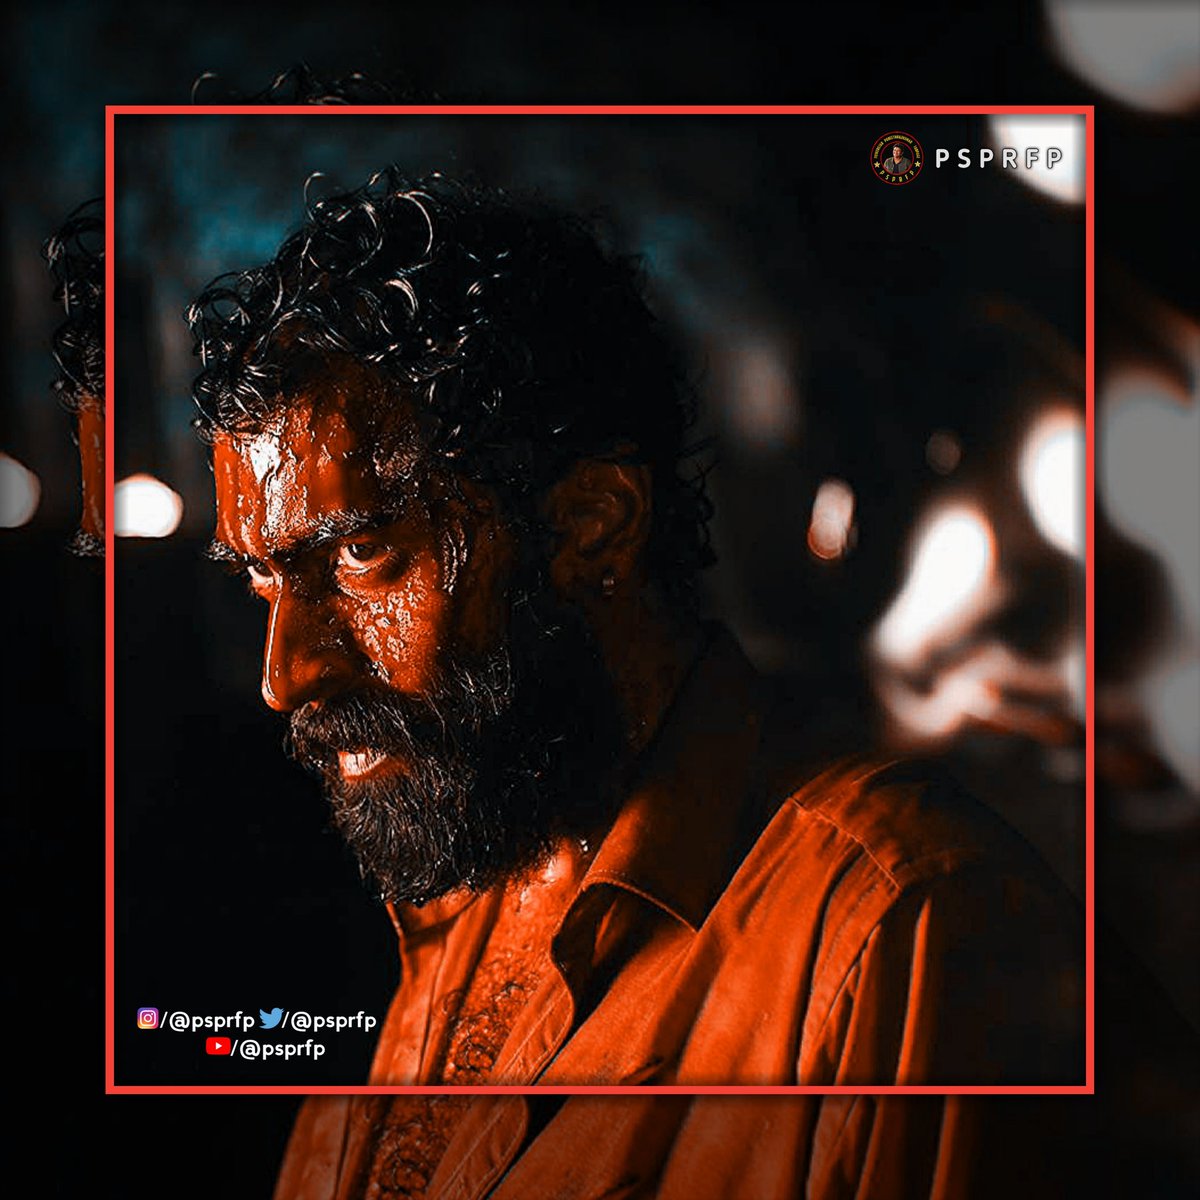 Love, Blood & Betrayal 💥

#TheRajkumars #VinayRajkumar #PePeTheFilm #PSPRFP